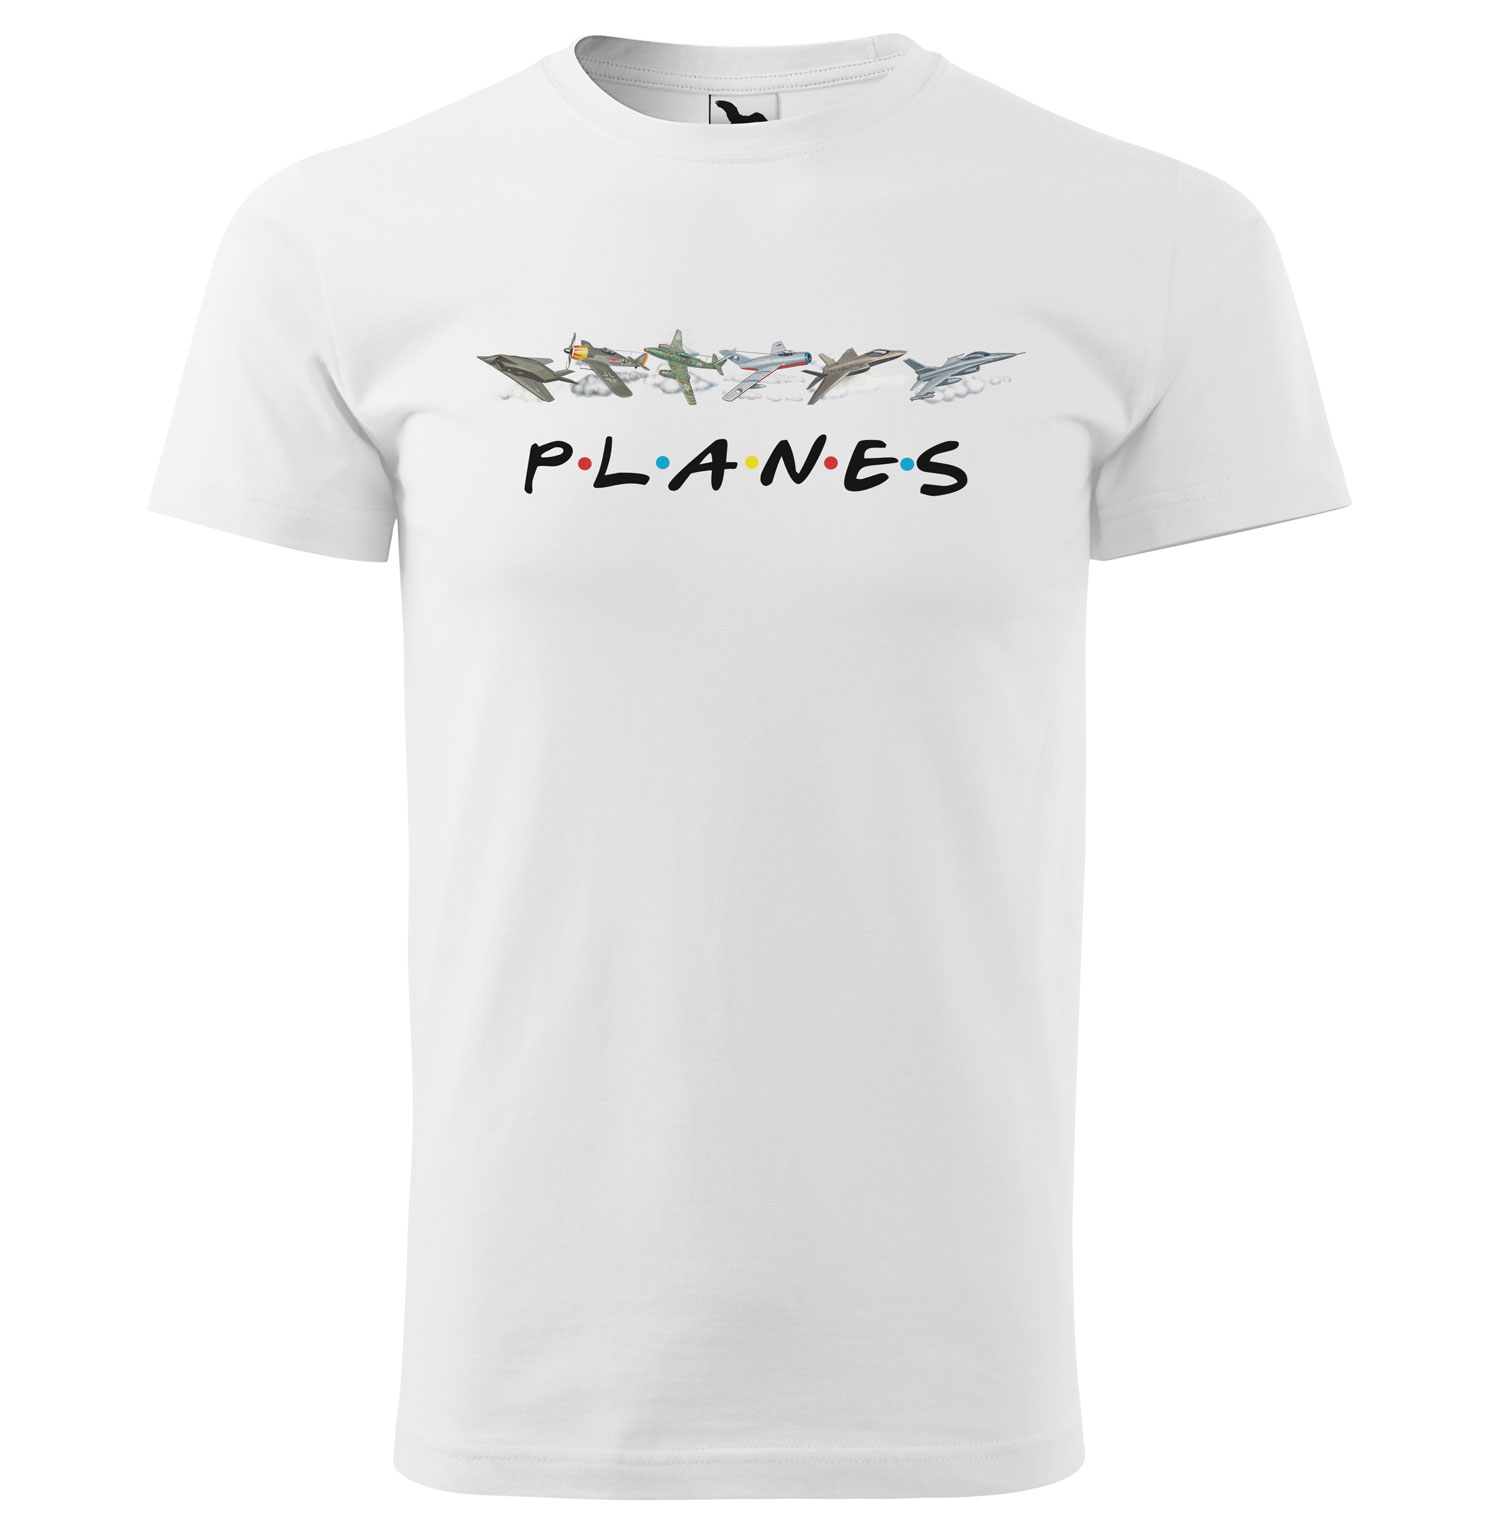 Tričko Planes (Velikost: 5XL, Typ: pro muže, Barva trička: Bílá)